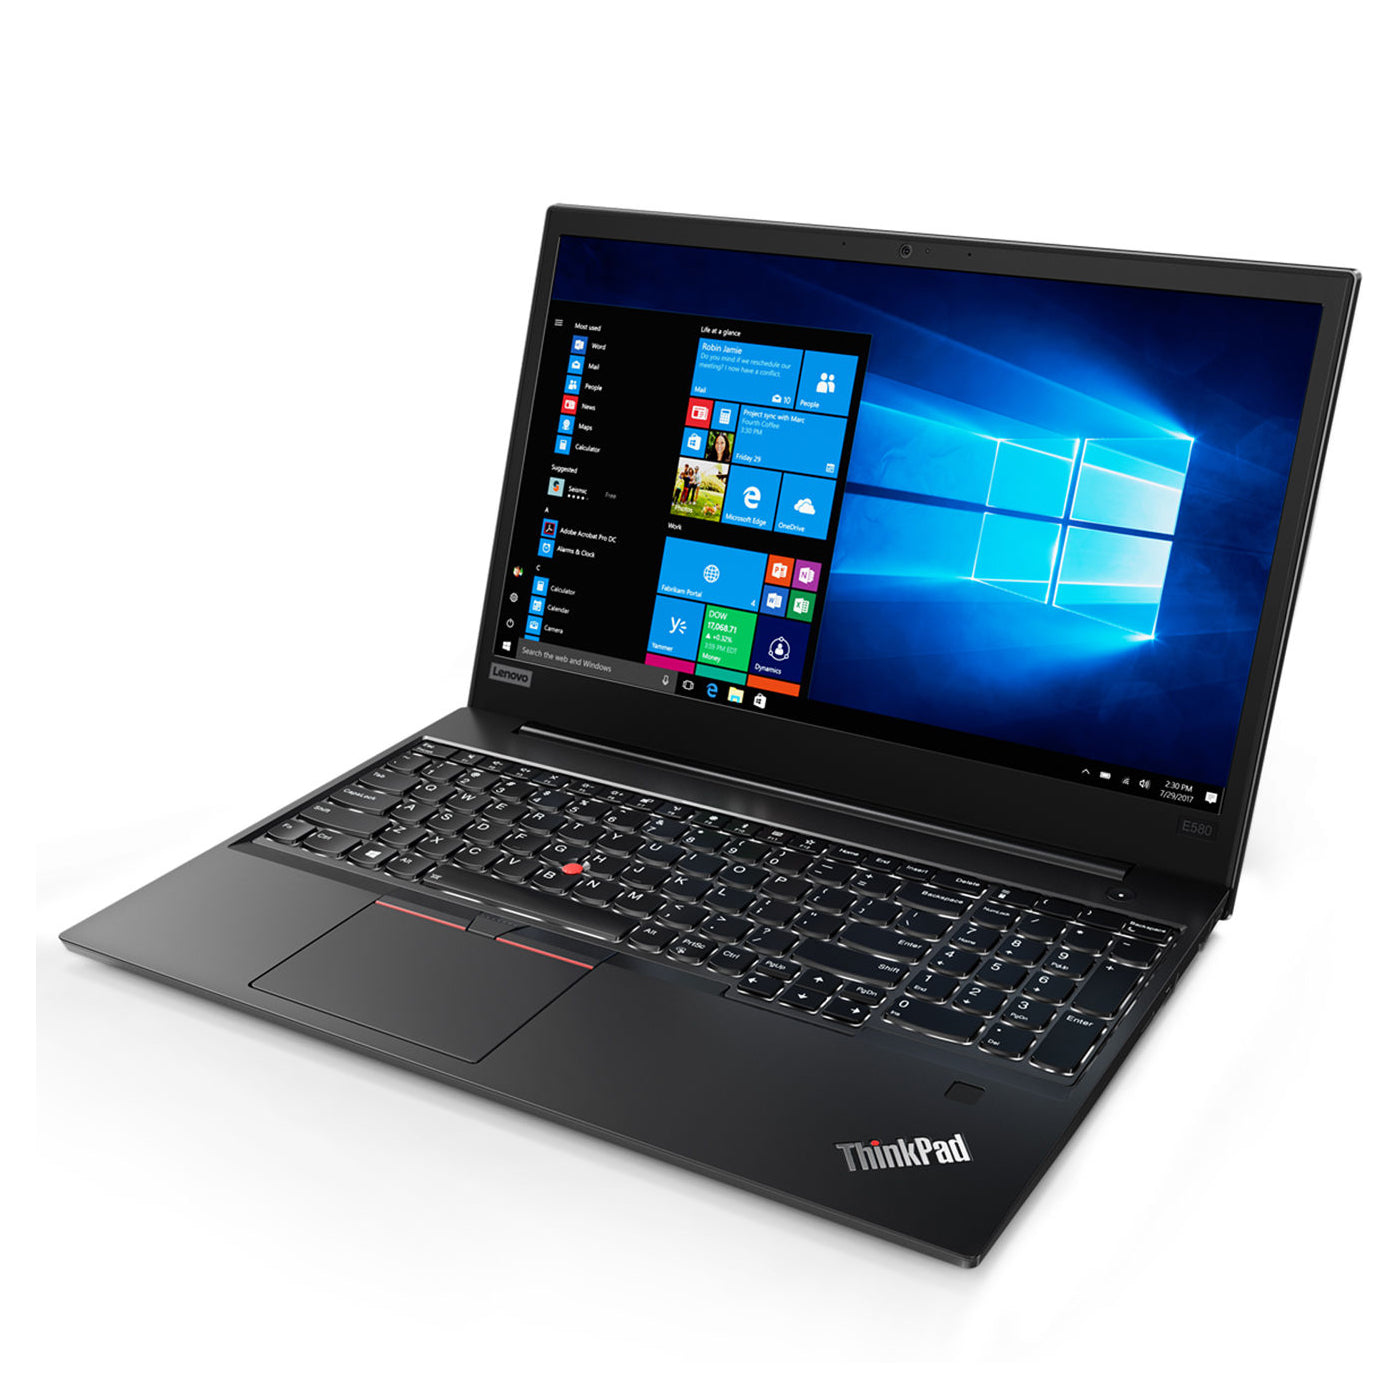 Lenovo Thinkpad E580 Core i5-8250u 15.6" Laptop Offers (Open Box)